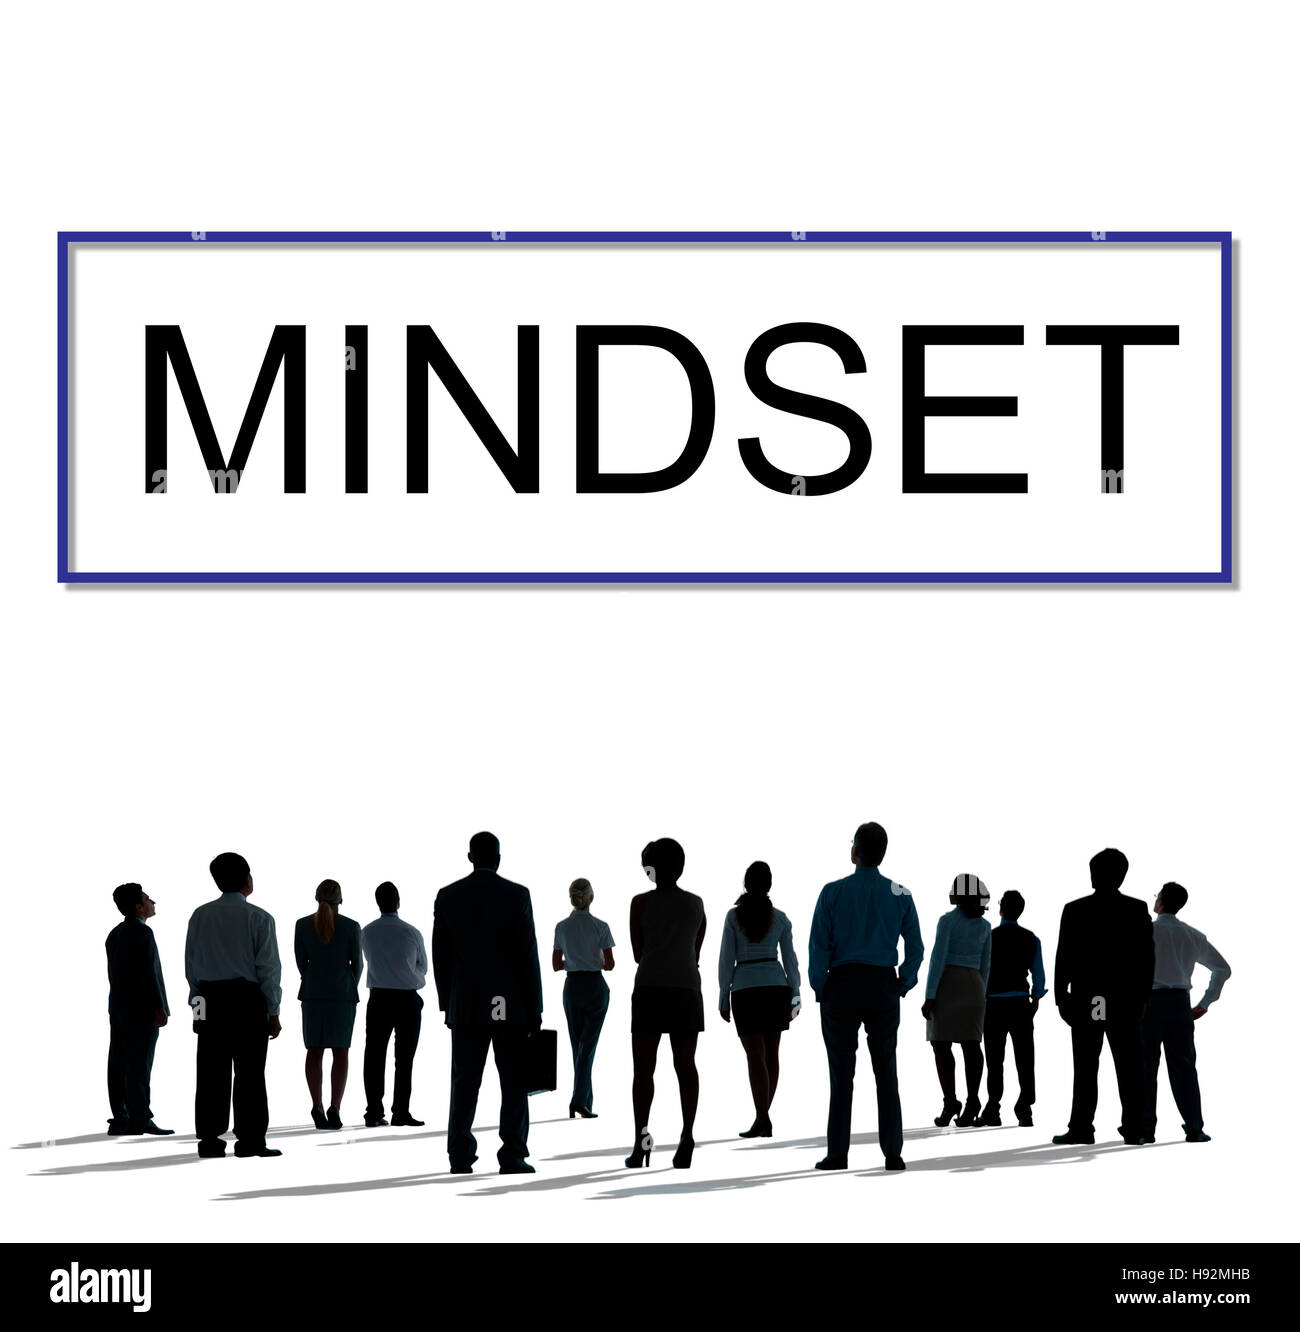 Mindset Belief Discipline Experience Knowledge Concept Stock Photo